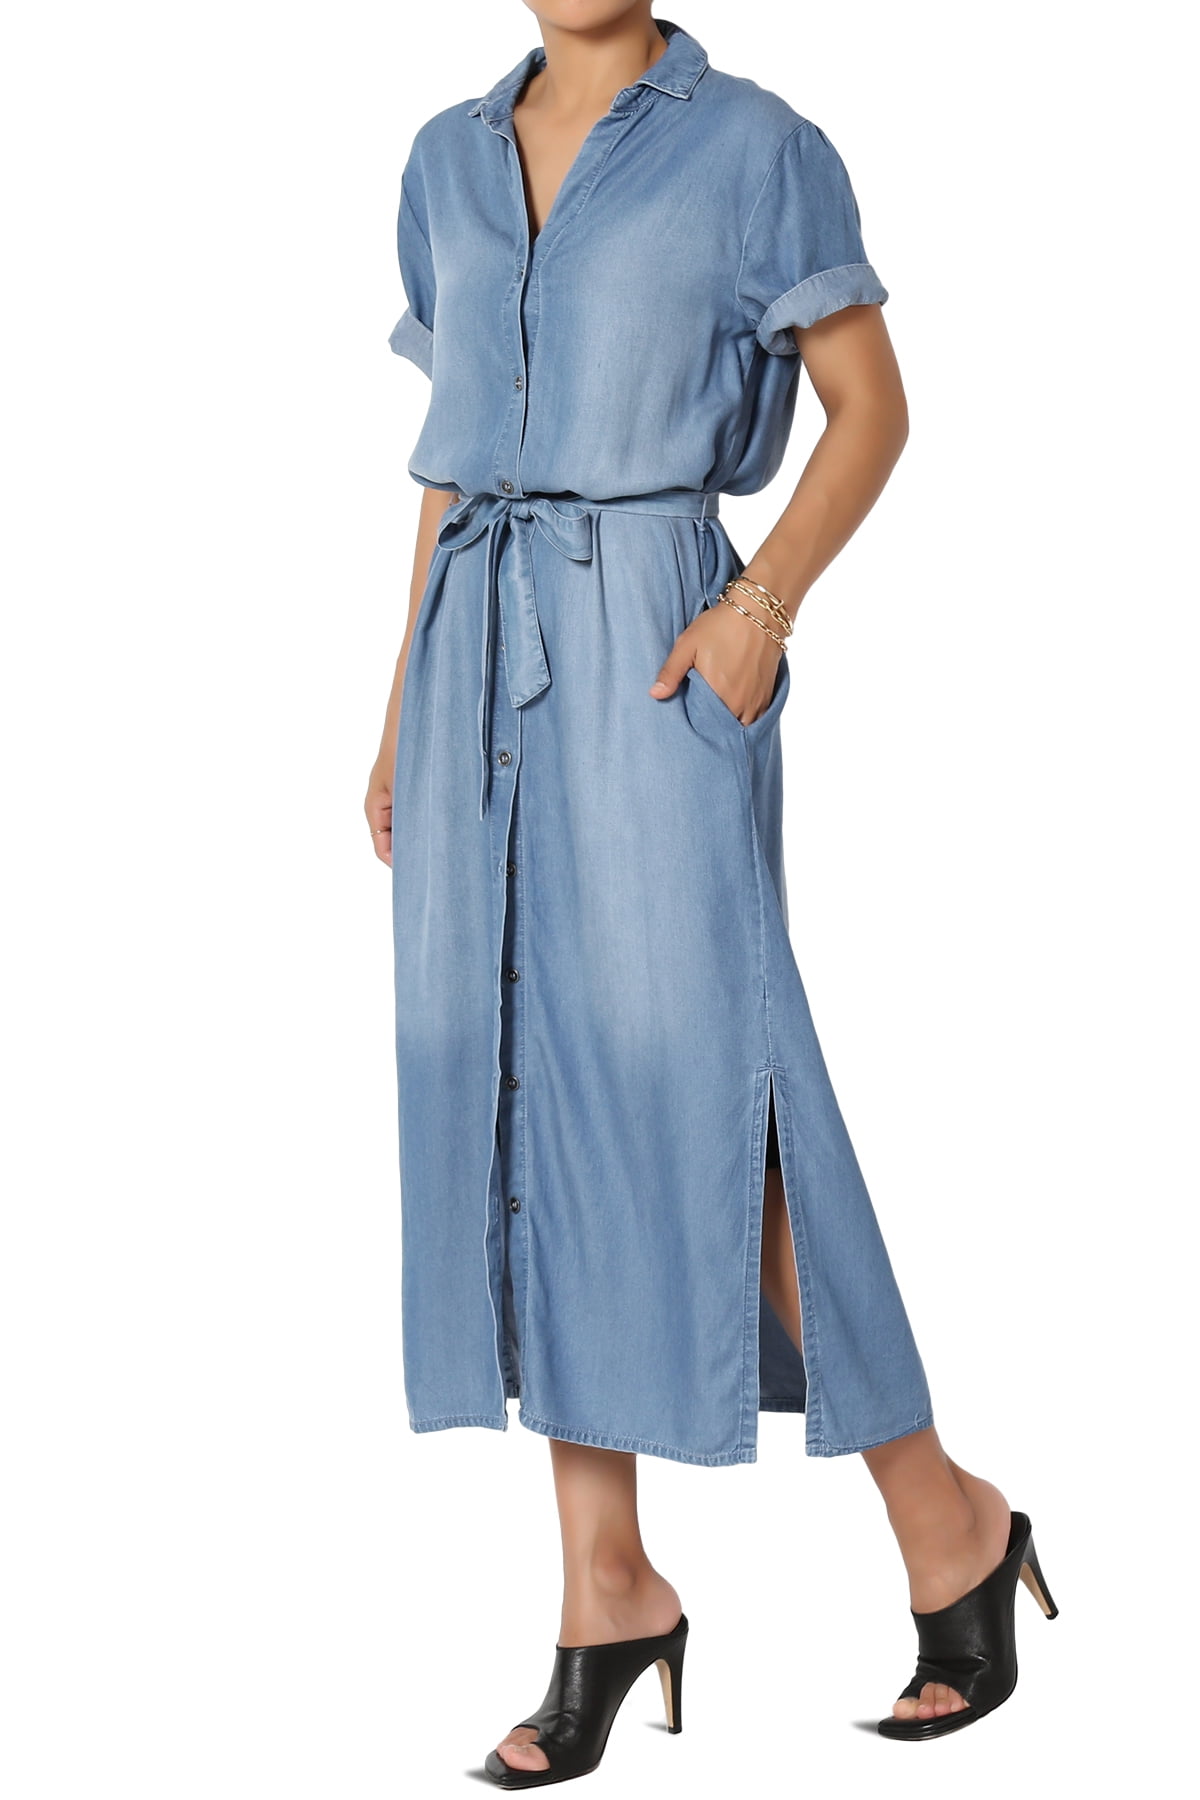 Zeagoo Women Collar High 3/4 Sleeve Button Decor Side Split Wear to Work Dress